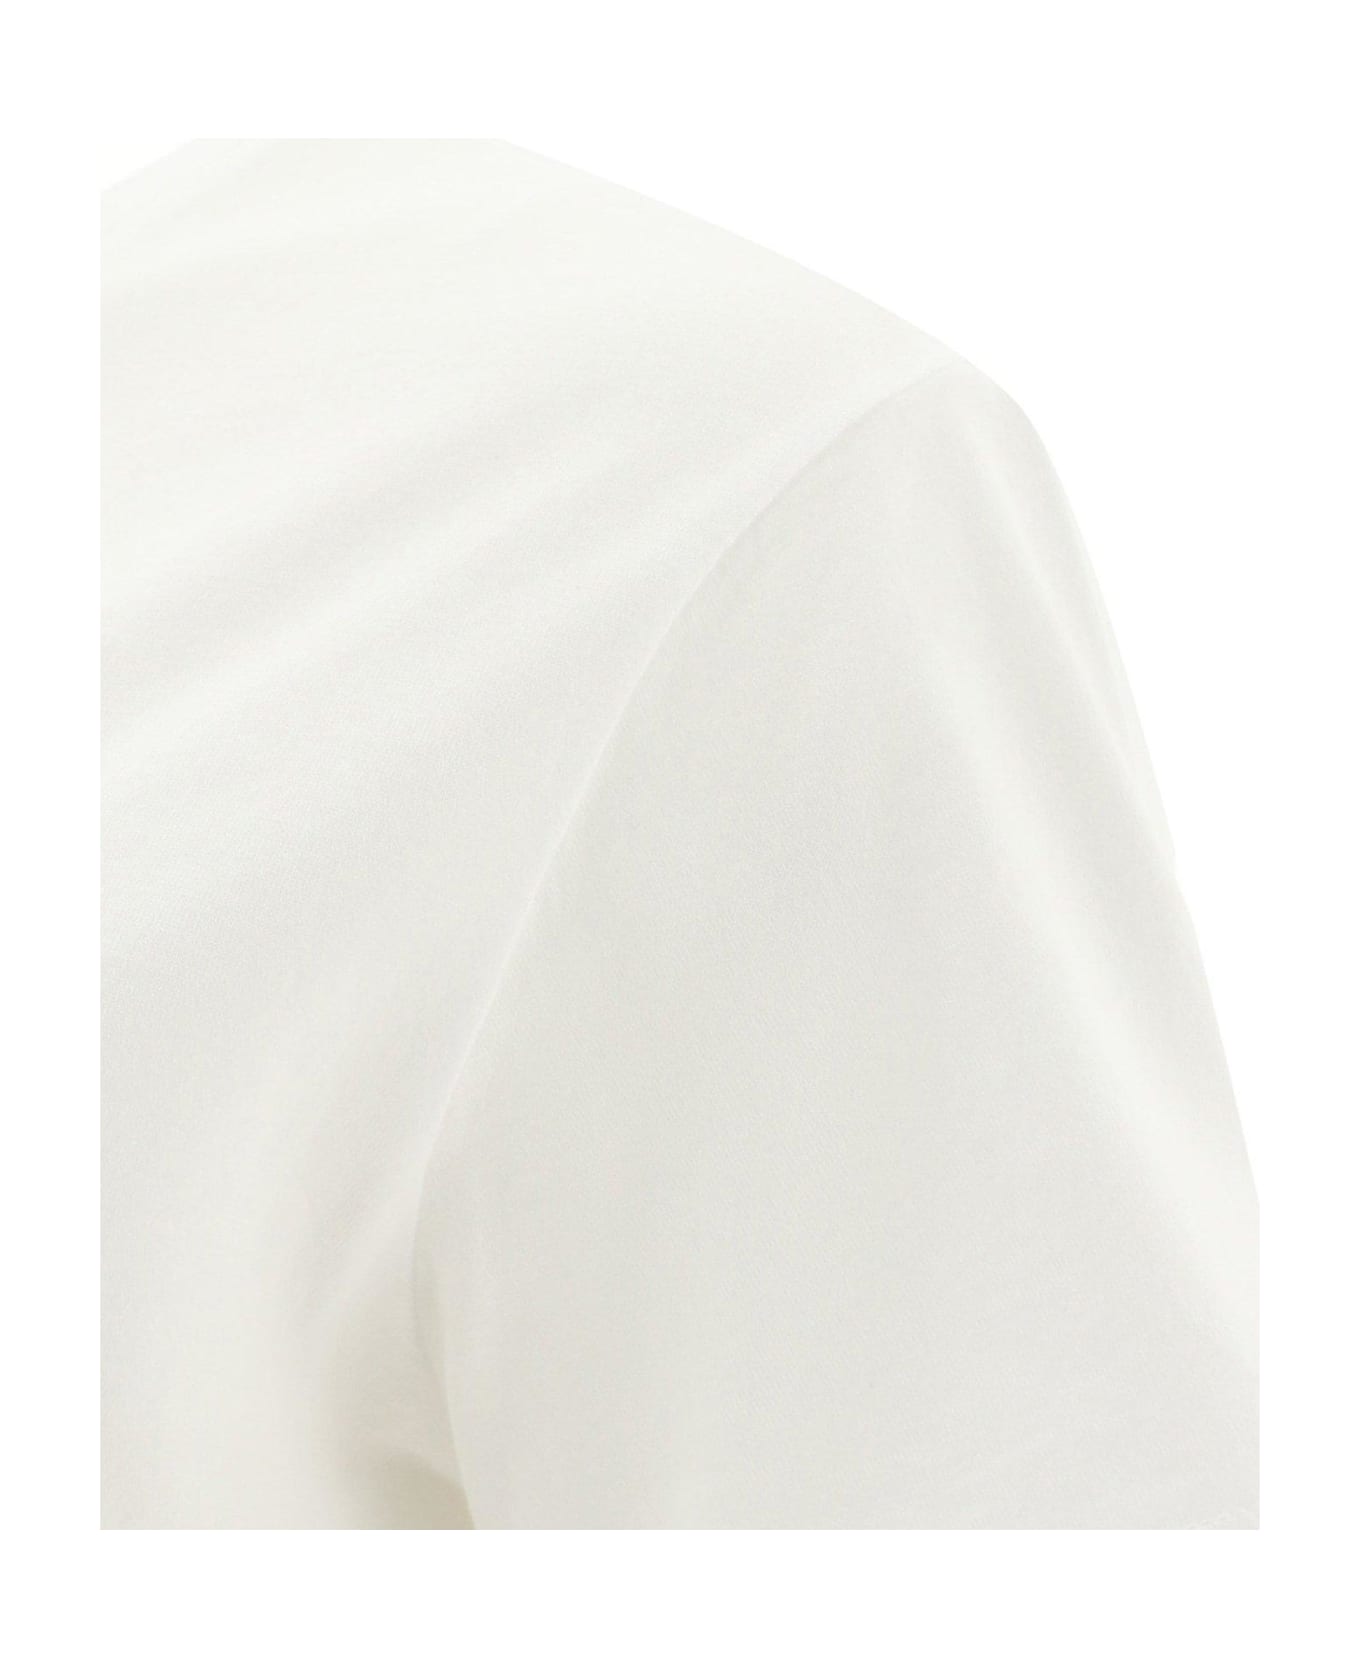 Aspesi Mod Z013 T-shirt - White